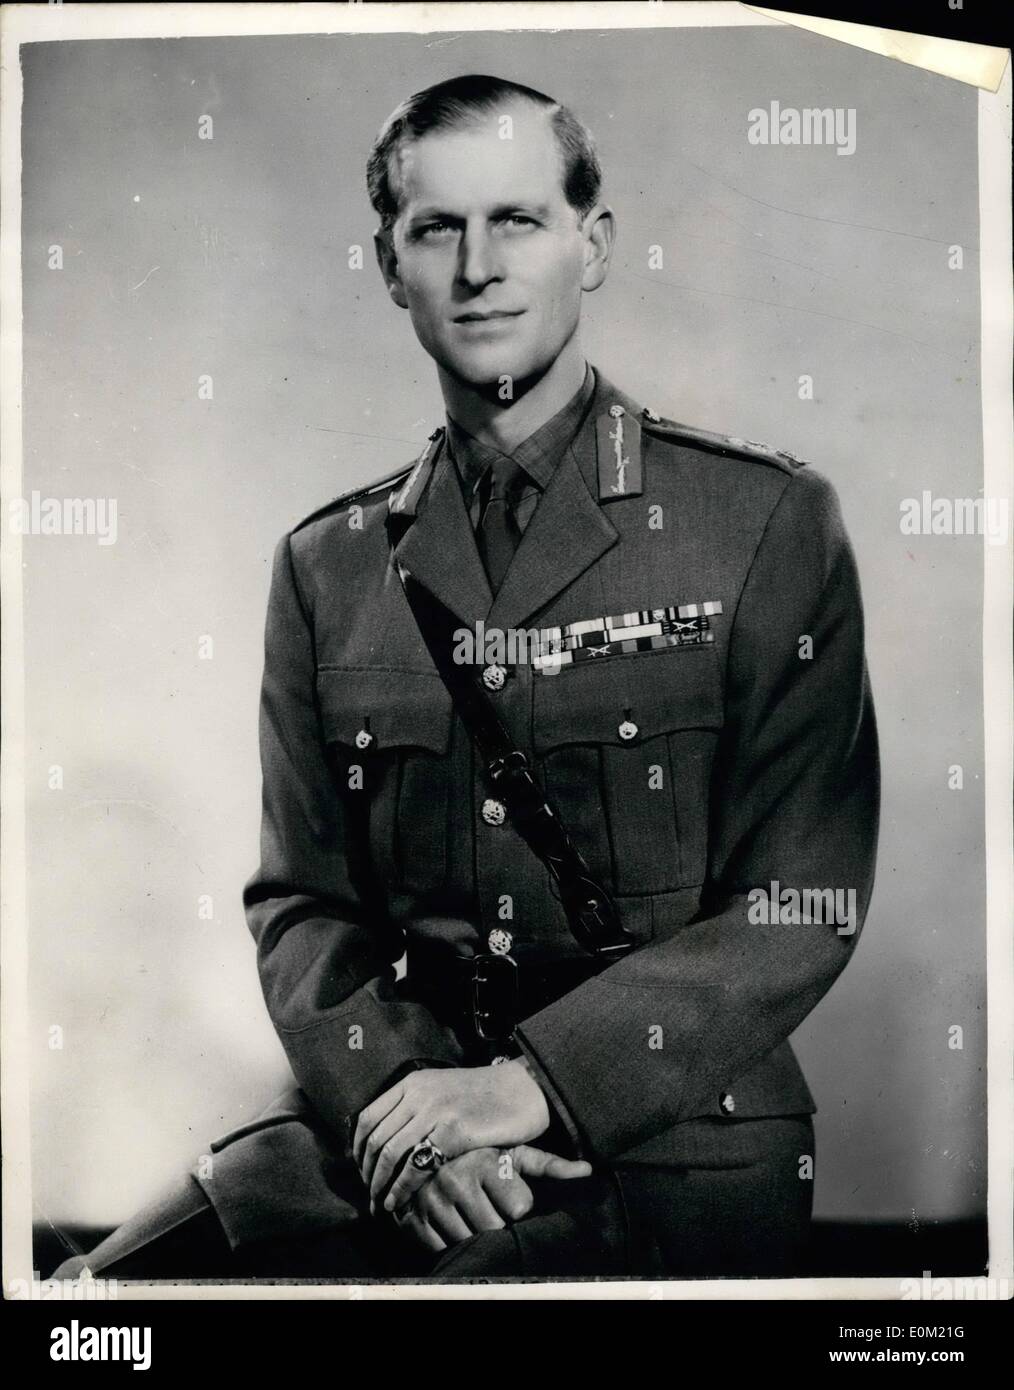 Mar. 03, 1953 - H.R.H. Duke of Edinburgh - Field Marshal of the Army. Photo  shows H.R.H. The Duke of Edinburgh wearing his new uniform as Field Marshal  of the Army Stock Photo - Alamy